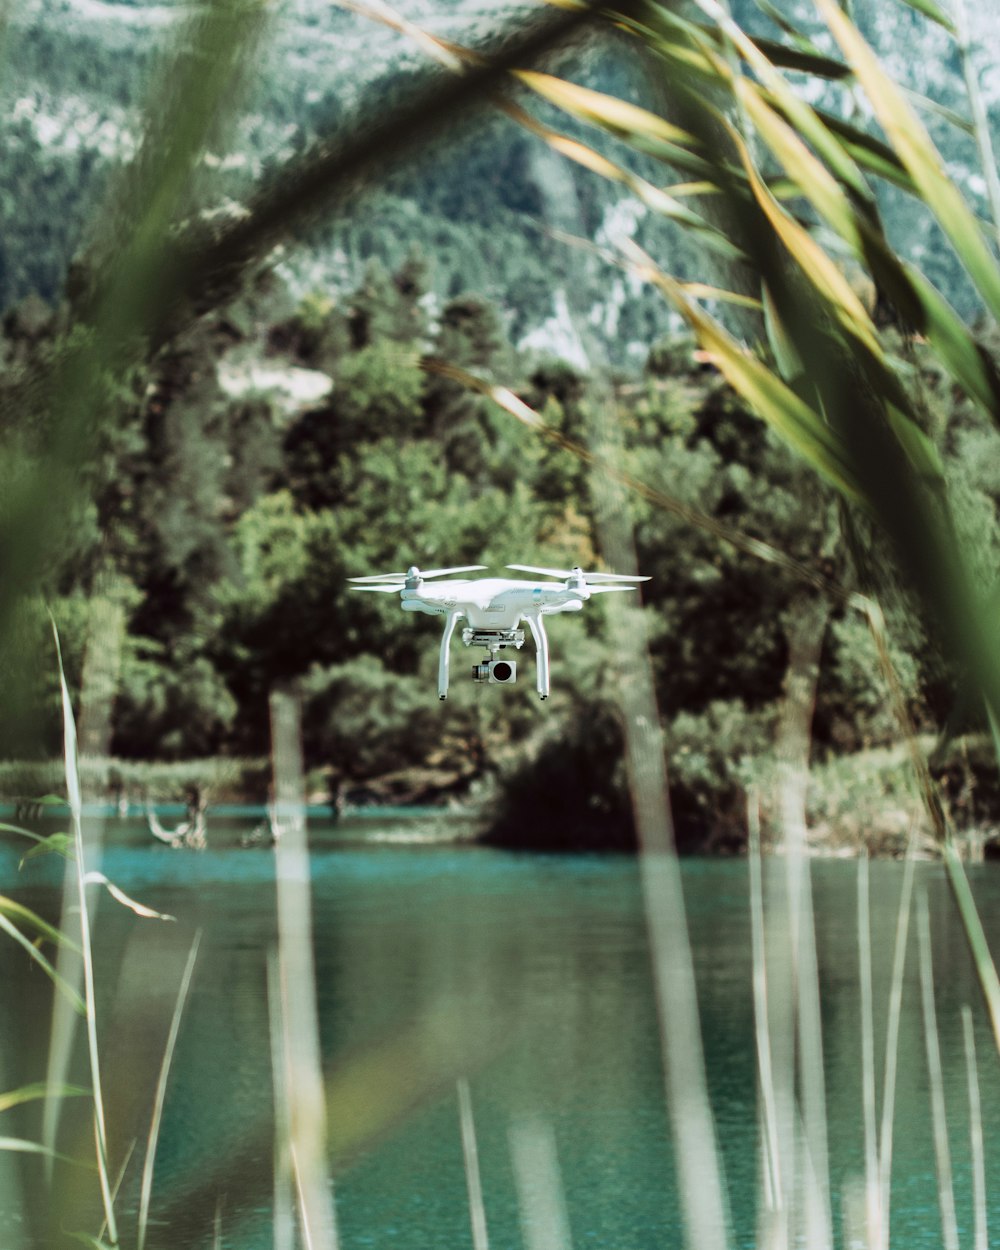 DJI Phantom 4 drone flying near body of water